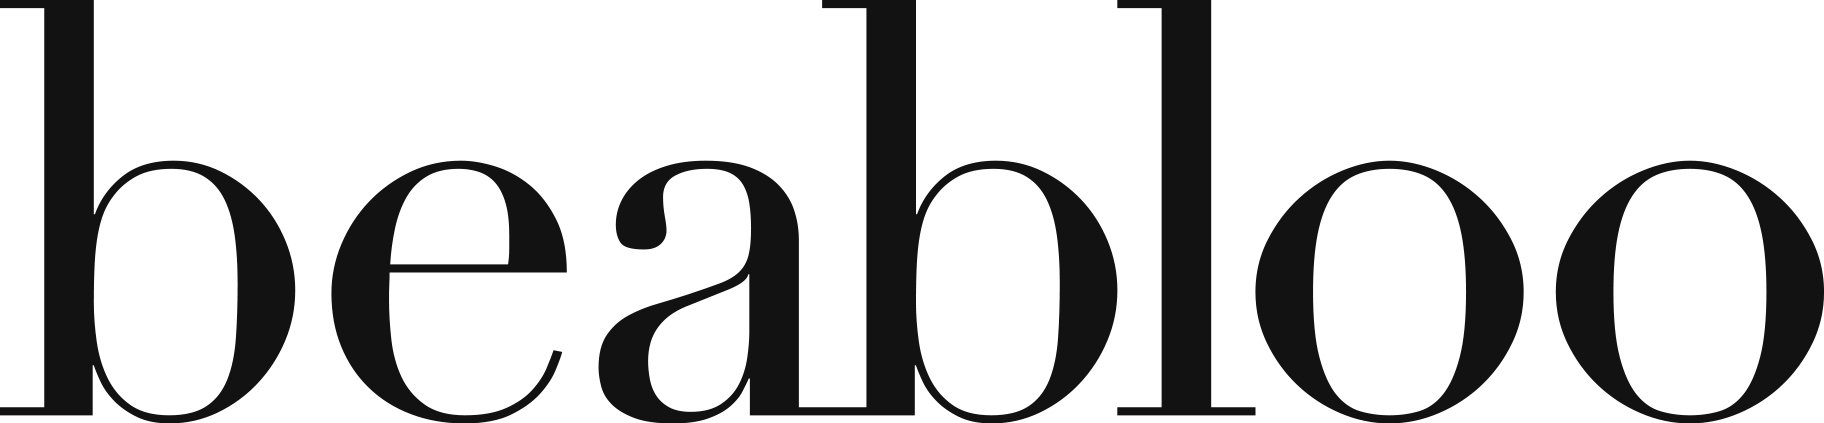 beabloo_logo.jpg